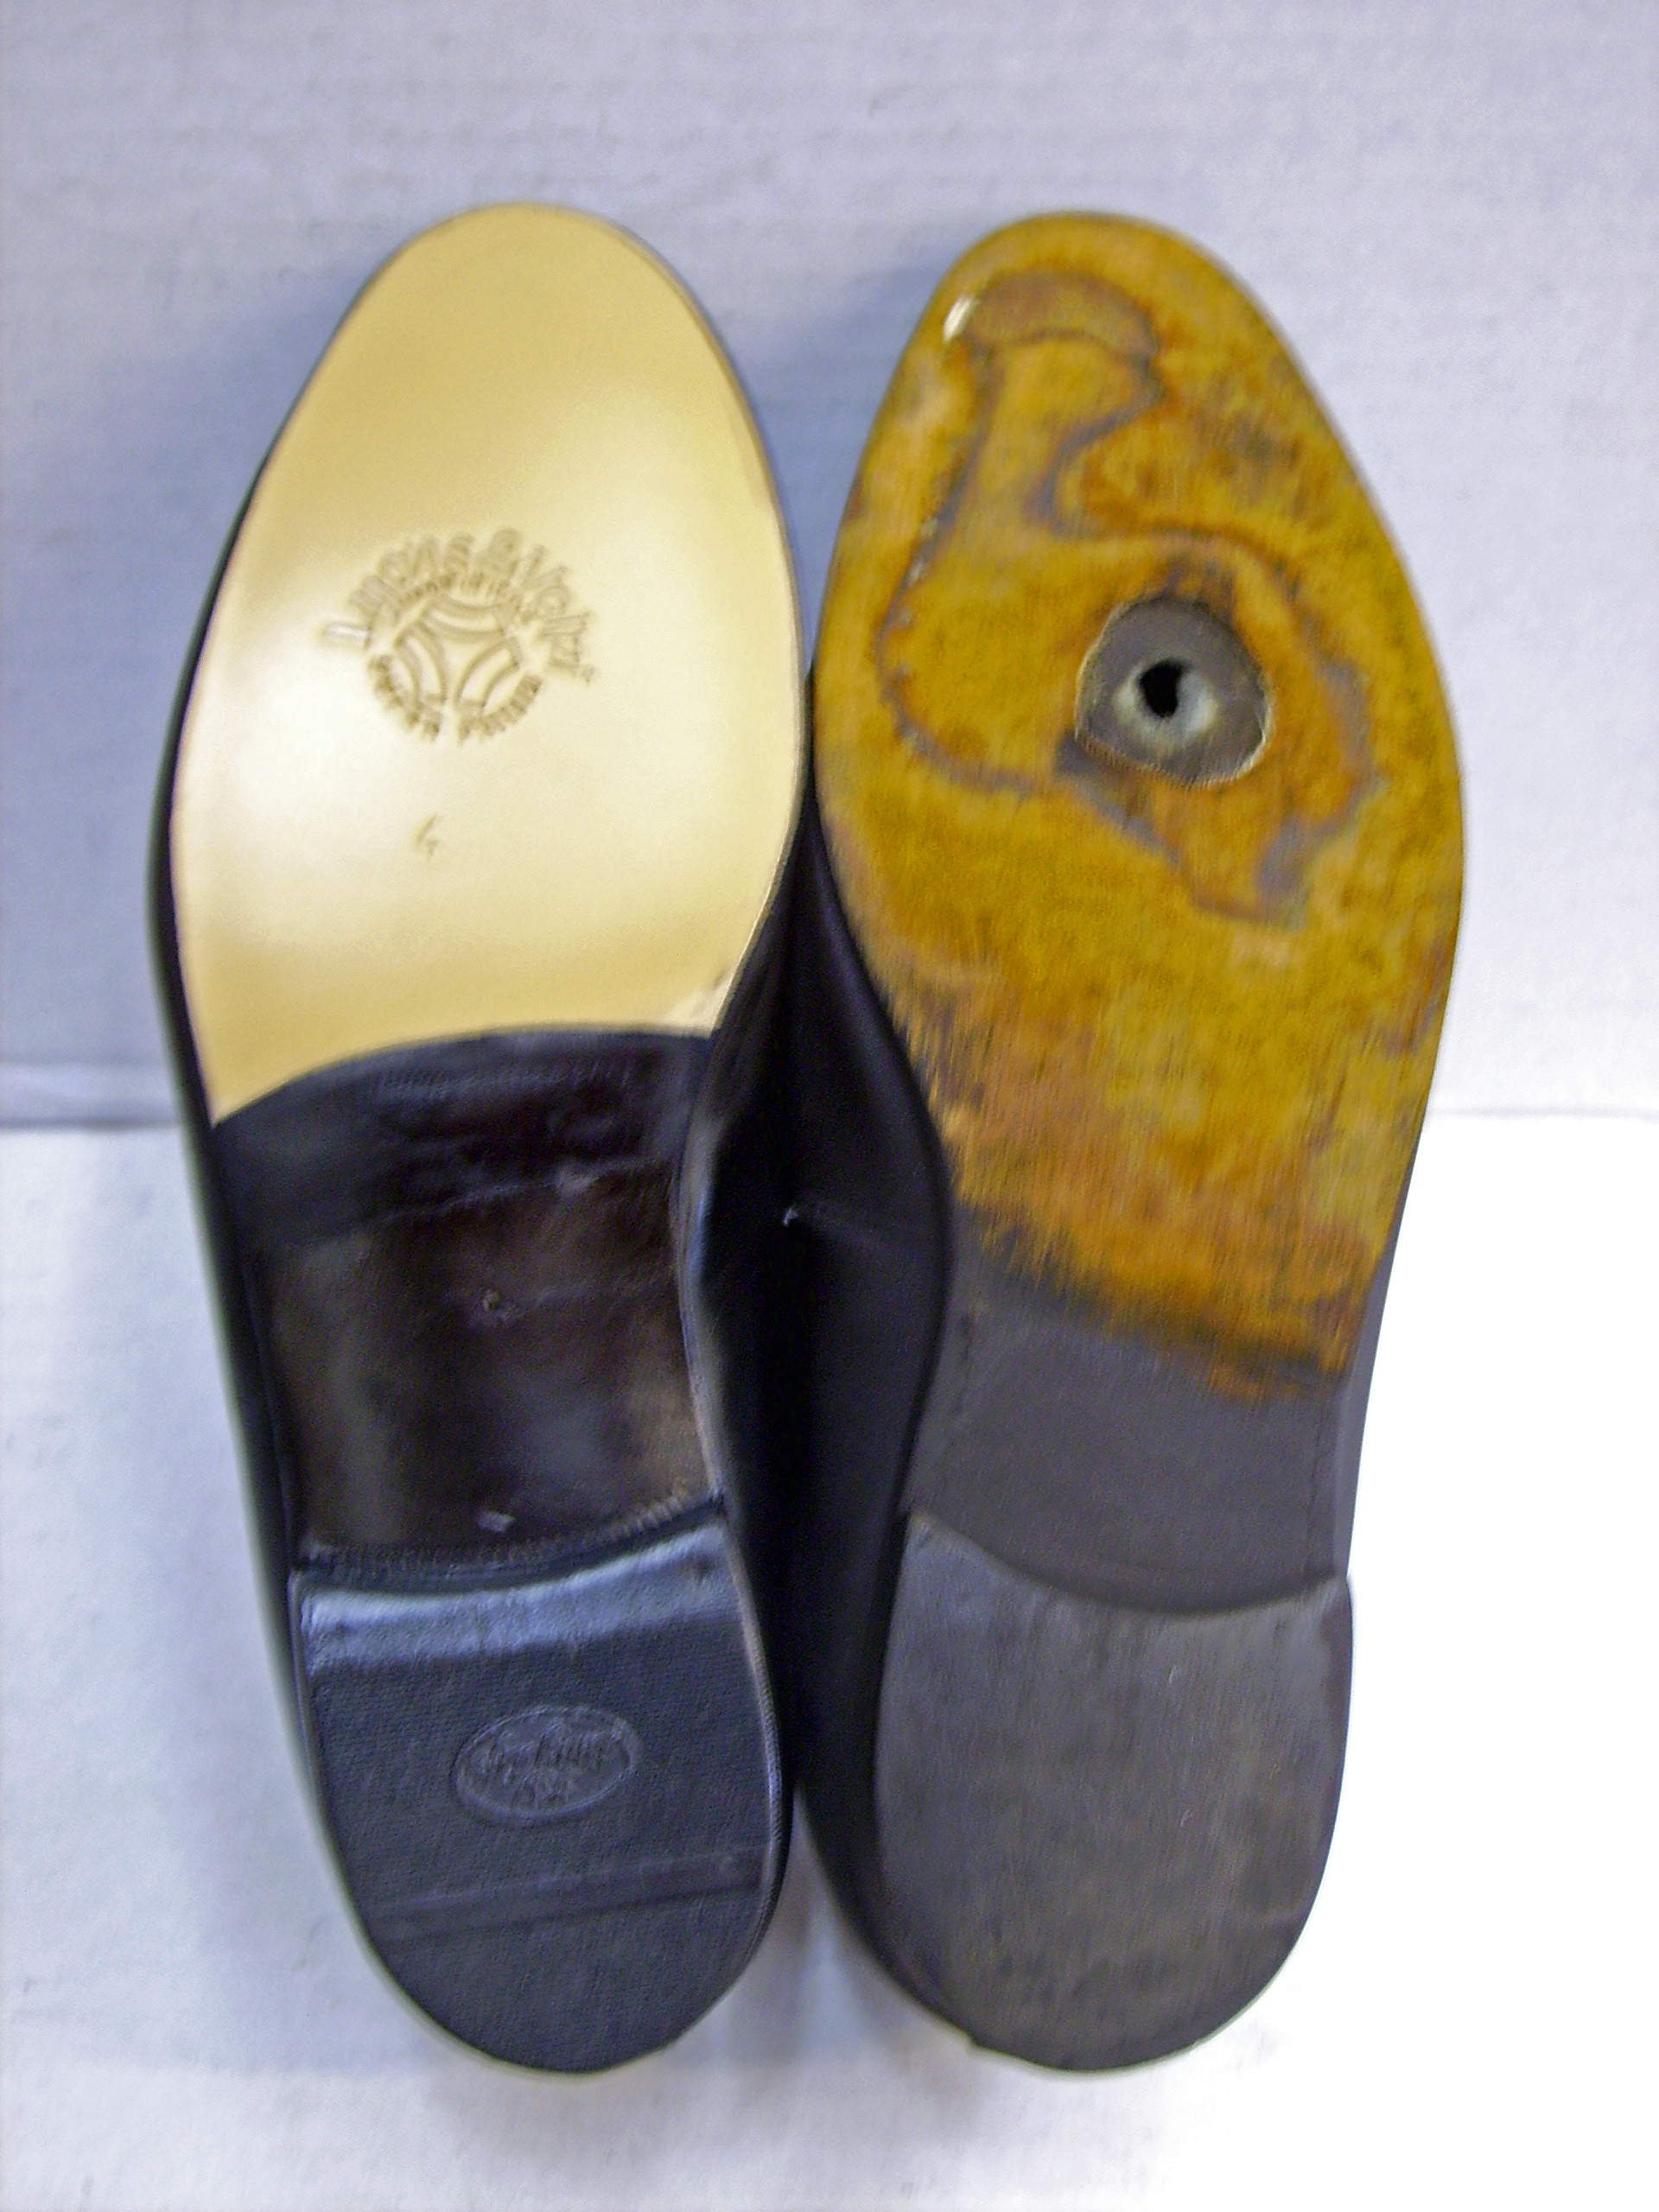 leather sole repair